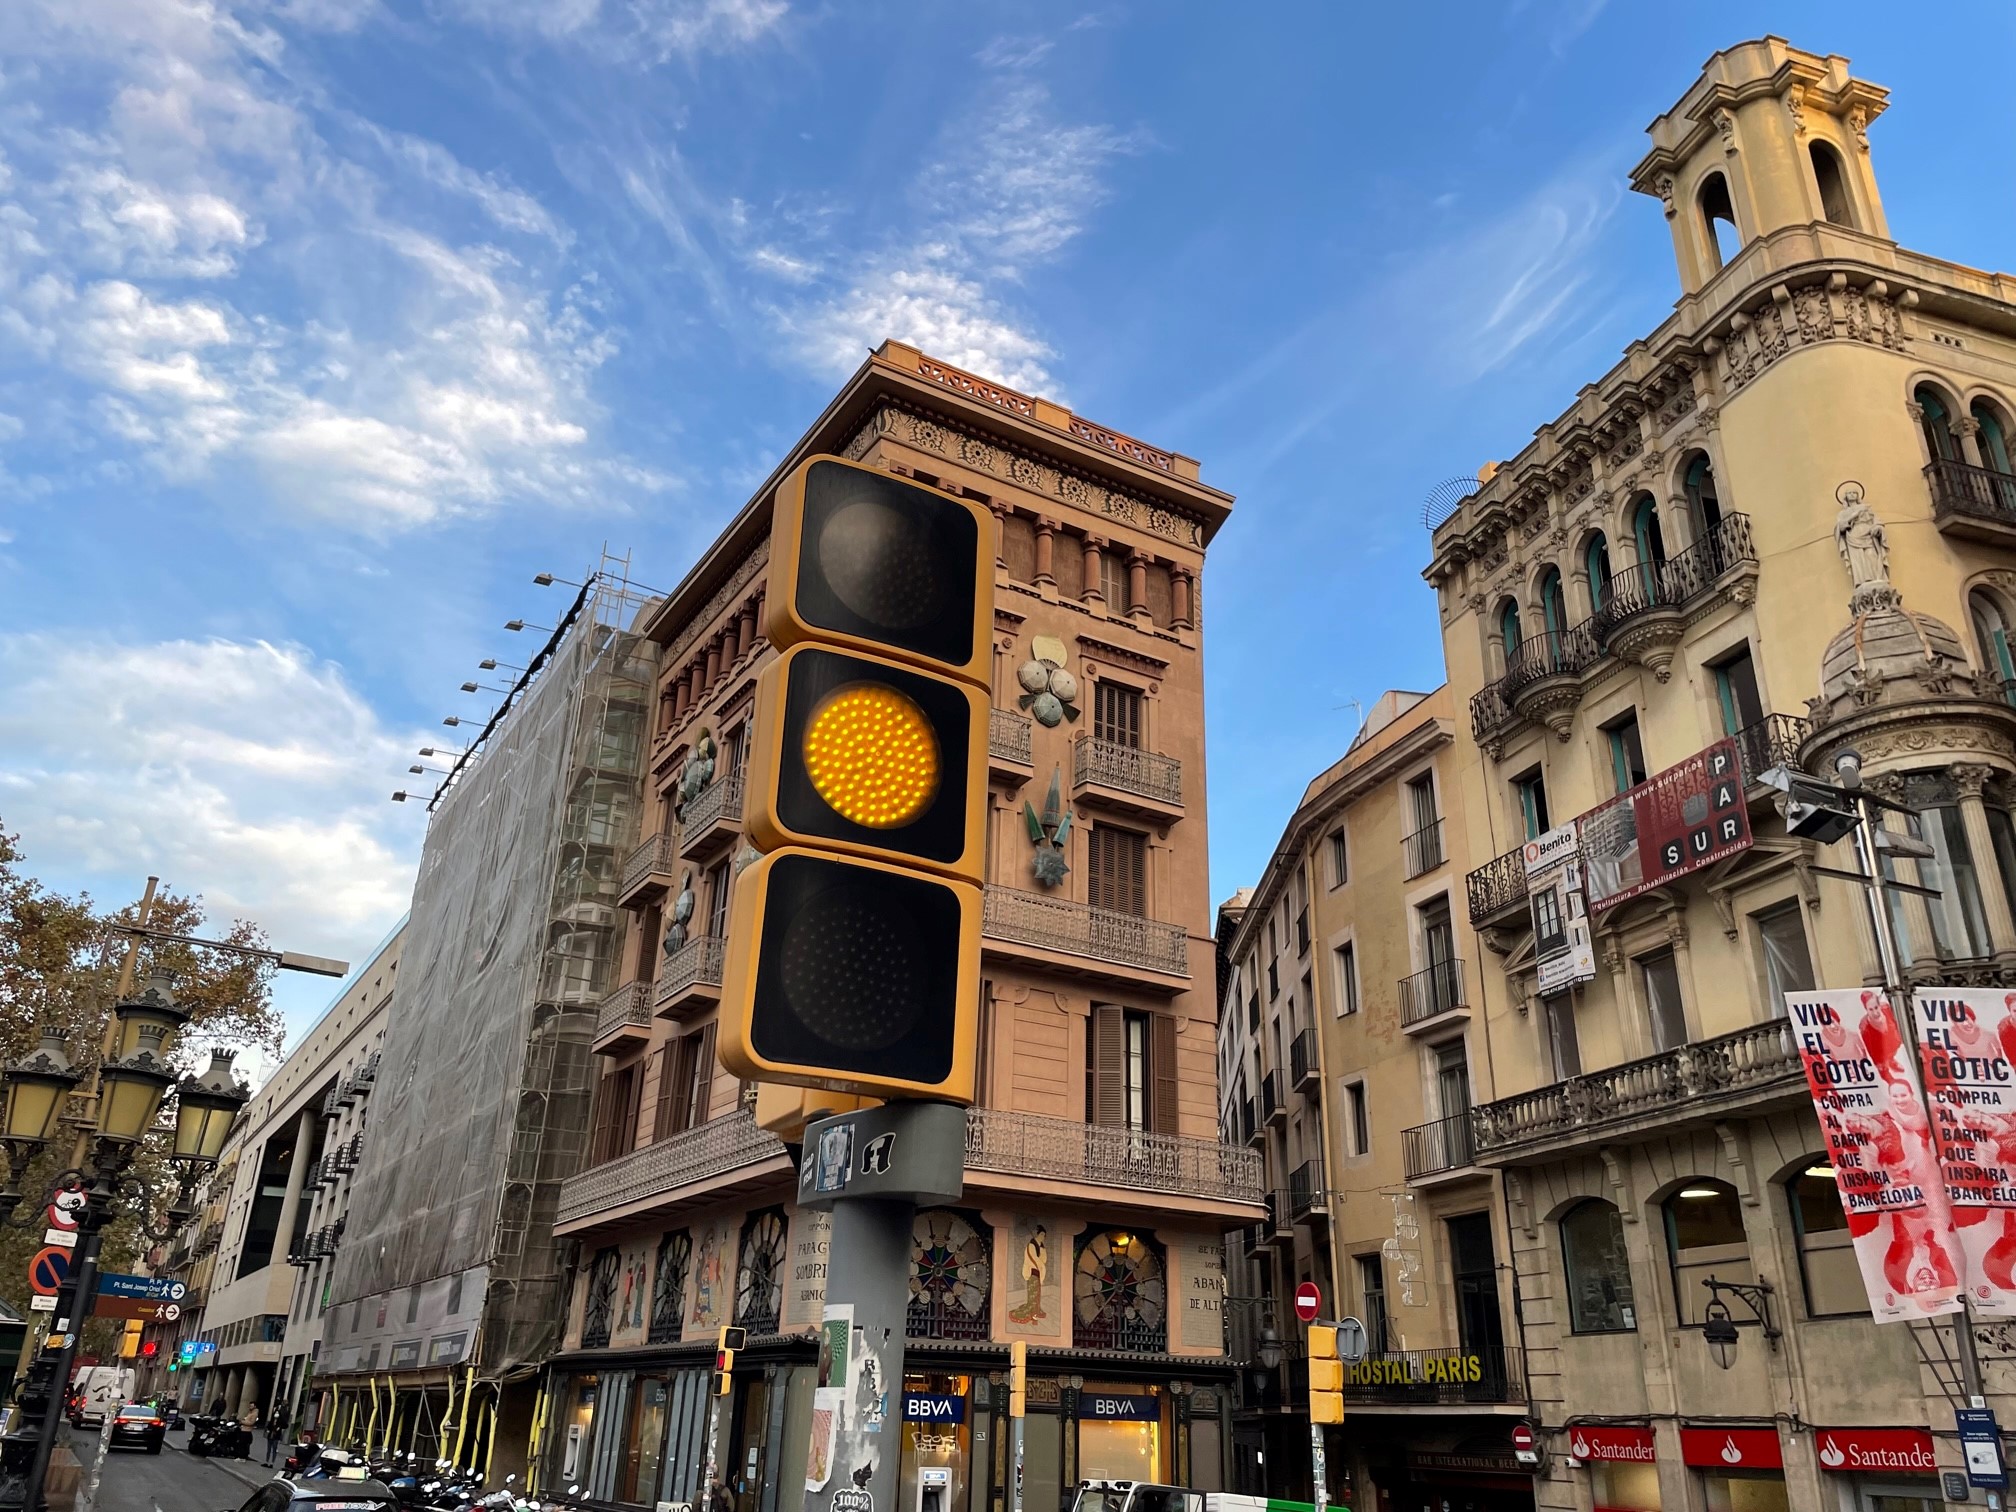 Barcelona Ramblas traffic innovation urban mobility (© ITS International)